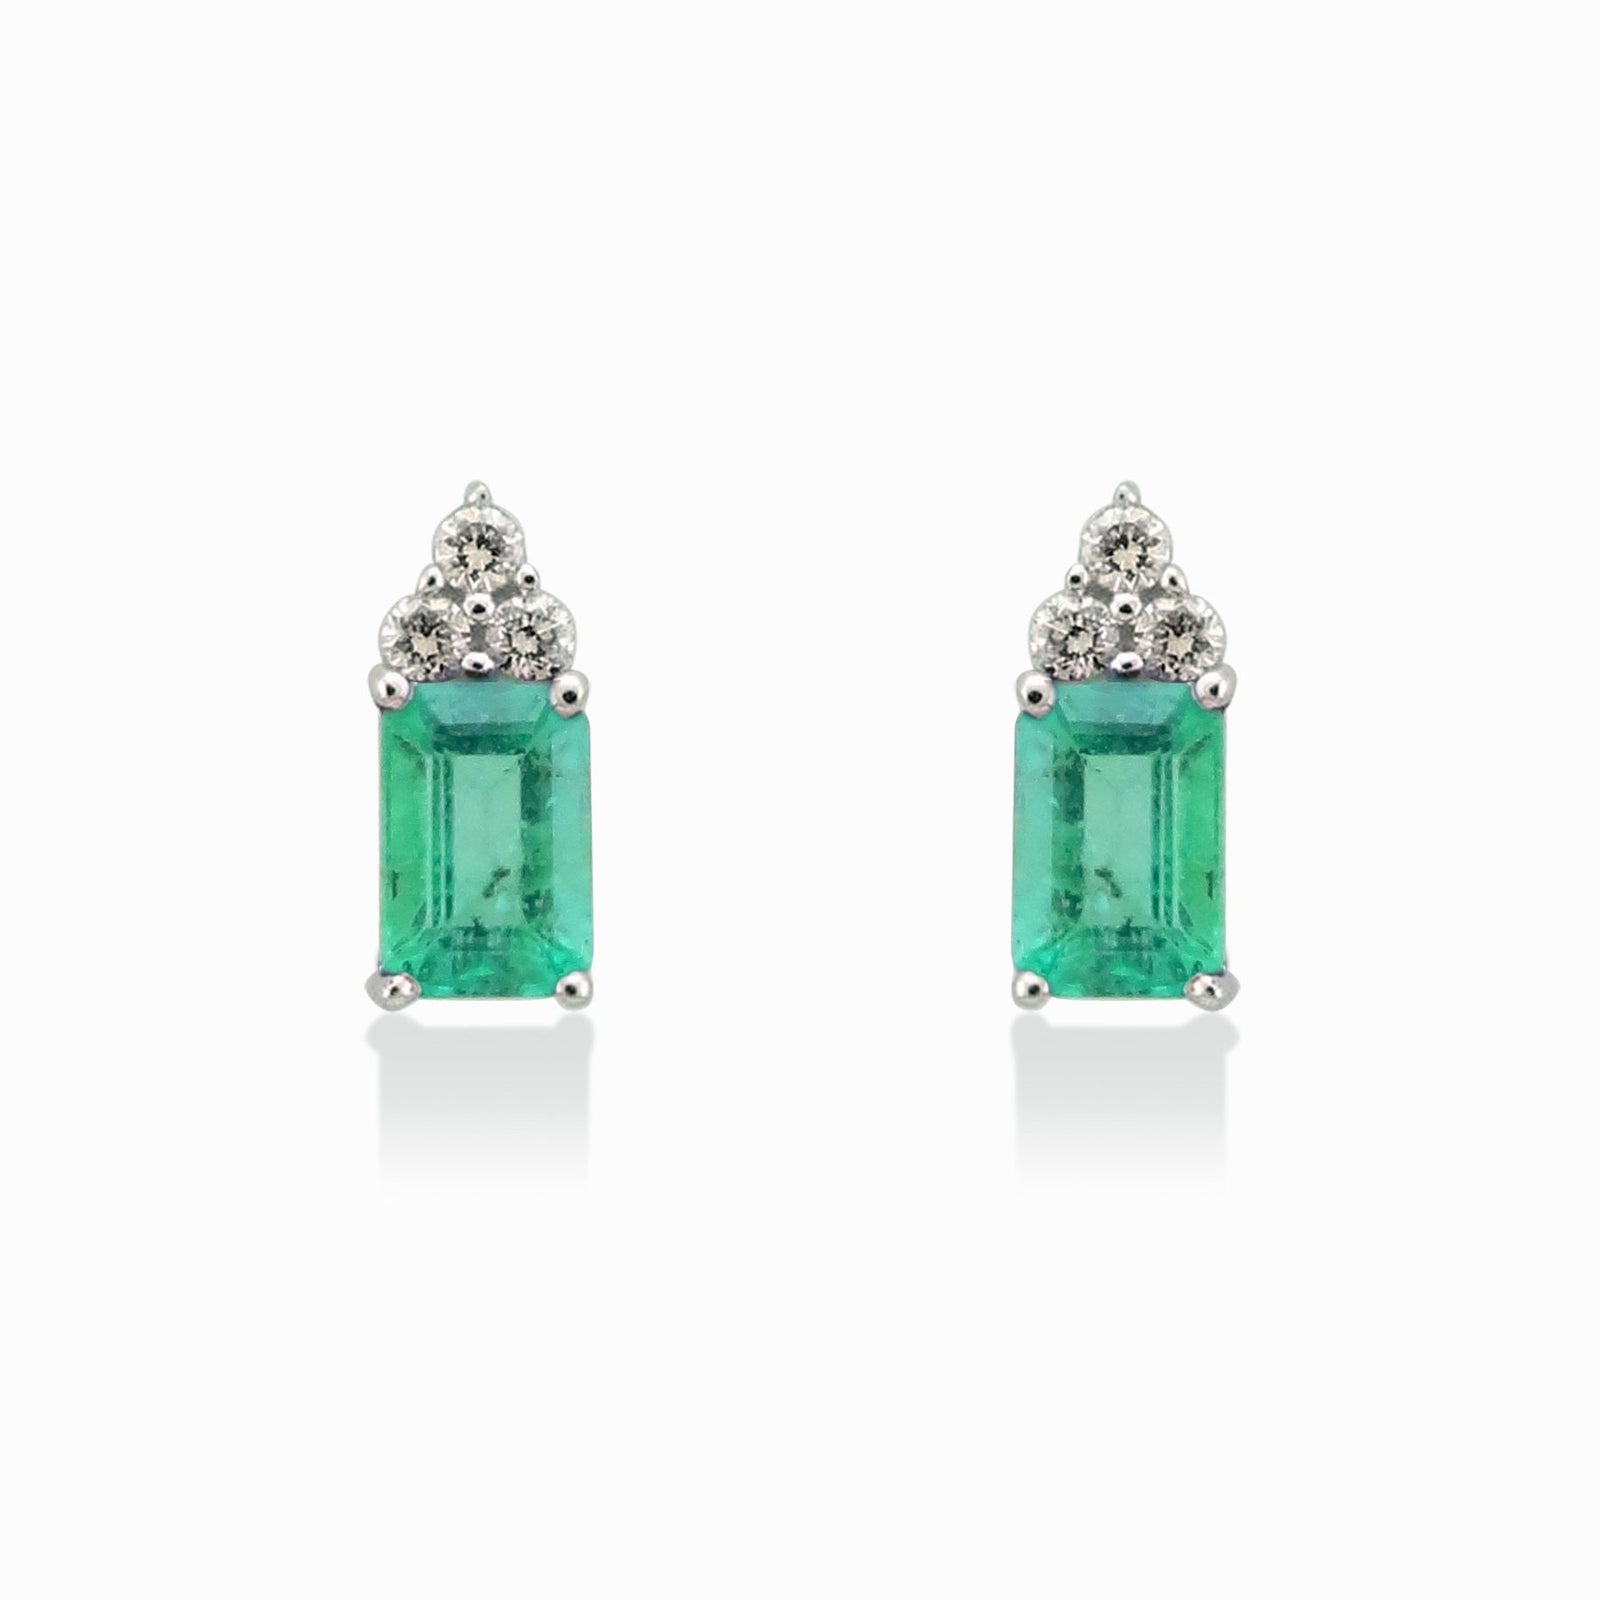 9ct gold 6x4mm octagon cut emerald & diamond stud earrings 0.13ct